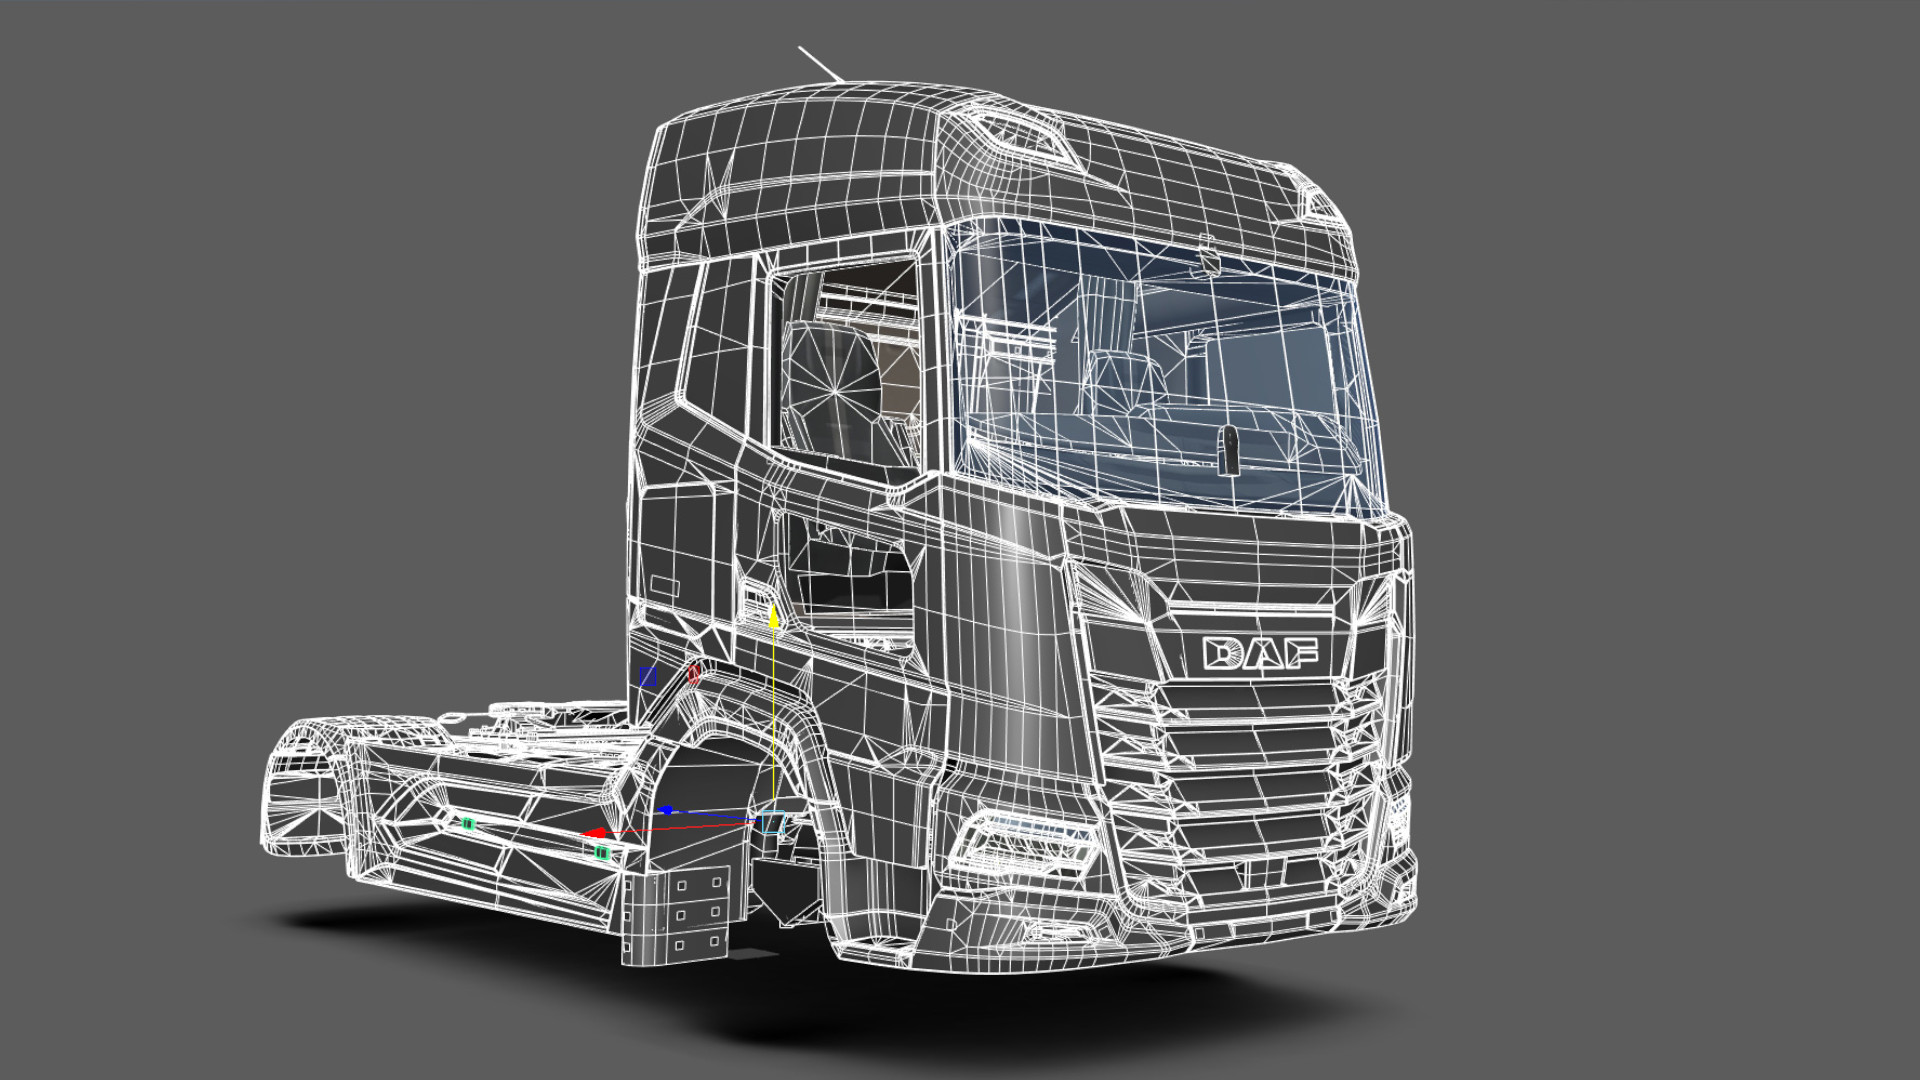  Euro  Truck  Simulator  2 devs provide an update on the 